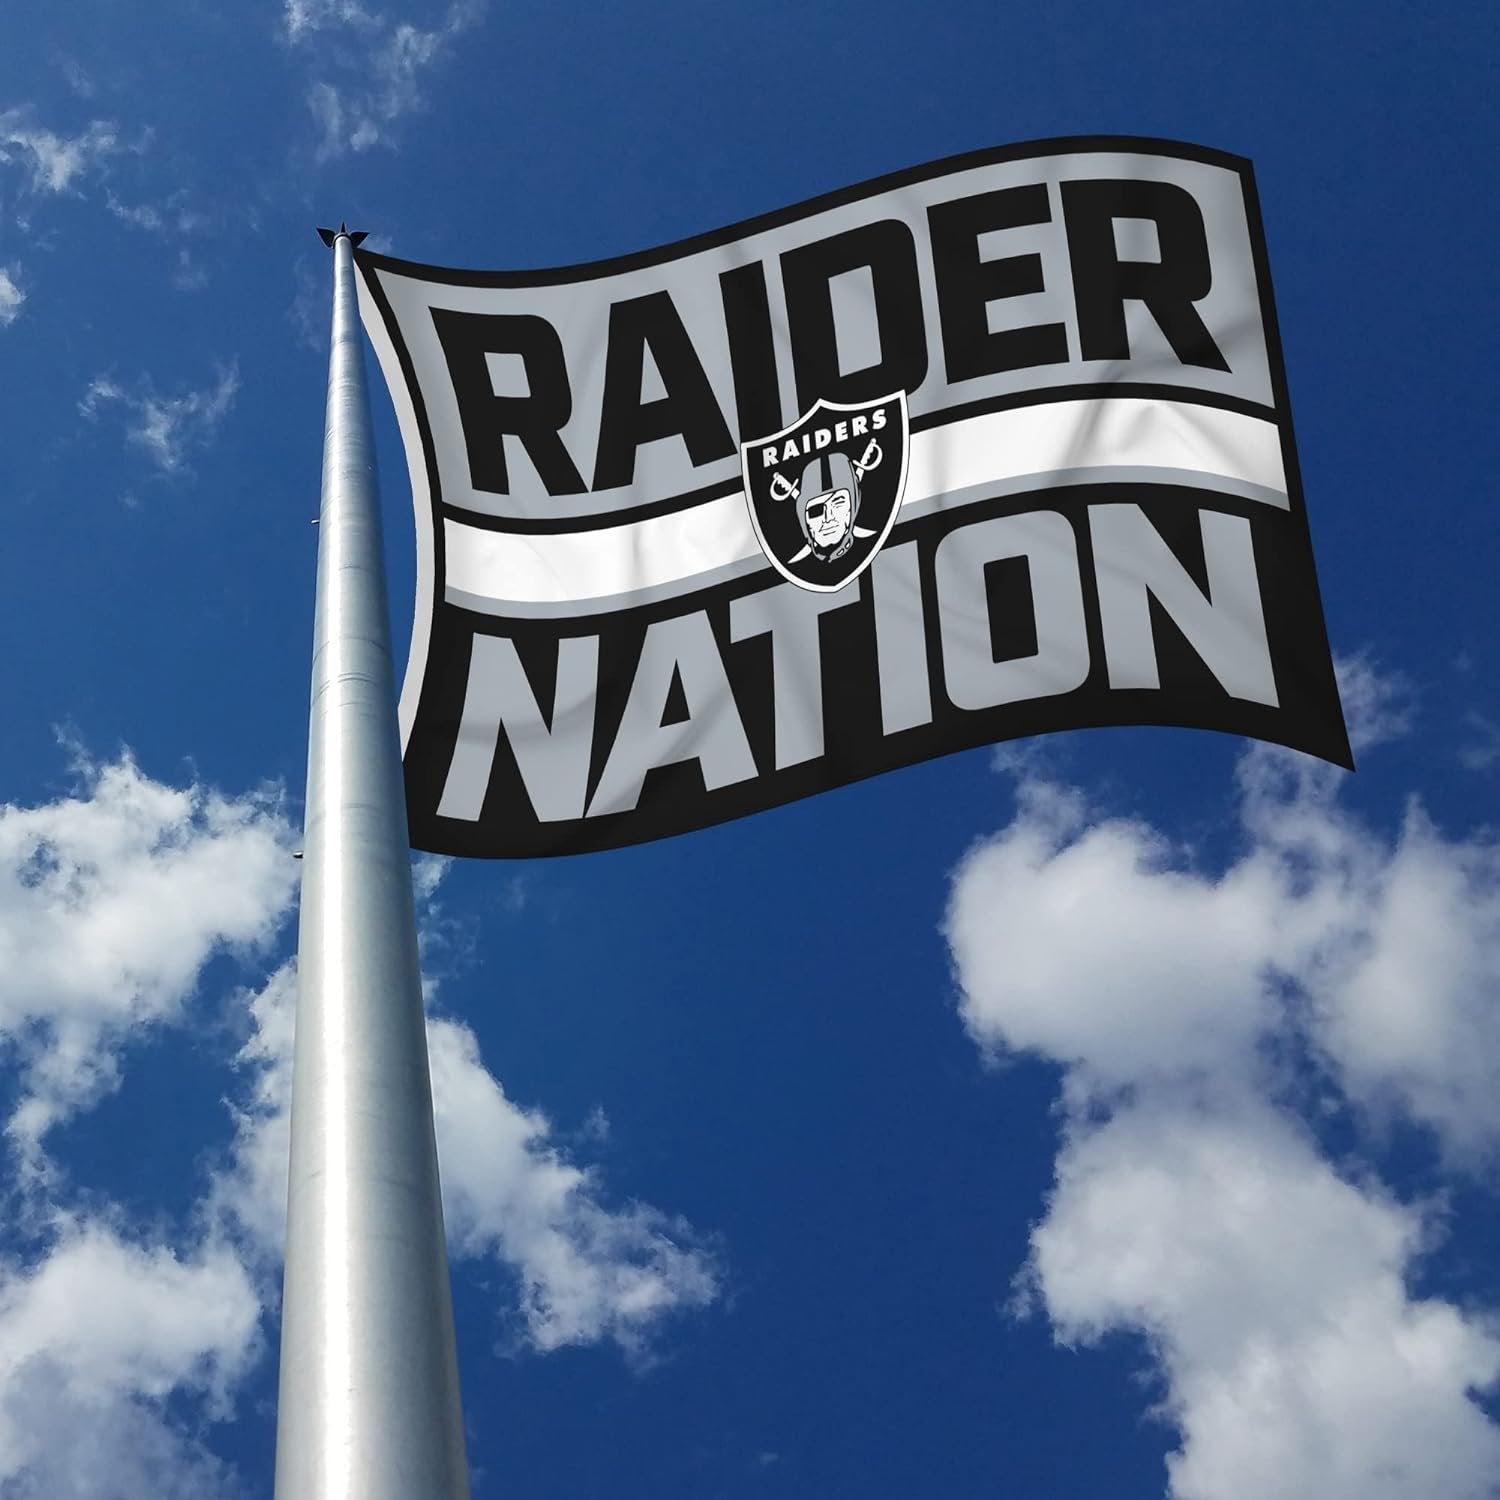 Las Vegas Raiders Premium 3x5 Foot Flag Banner, Bold Design, Metal Grommets, Outdoor Indoor Use, Single Sided